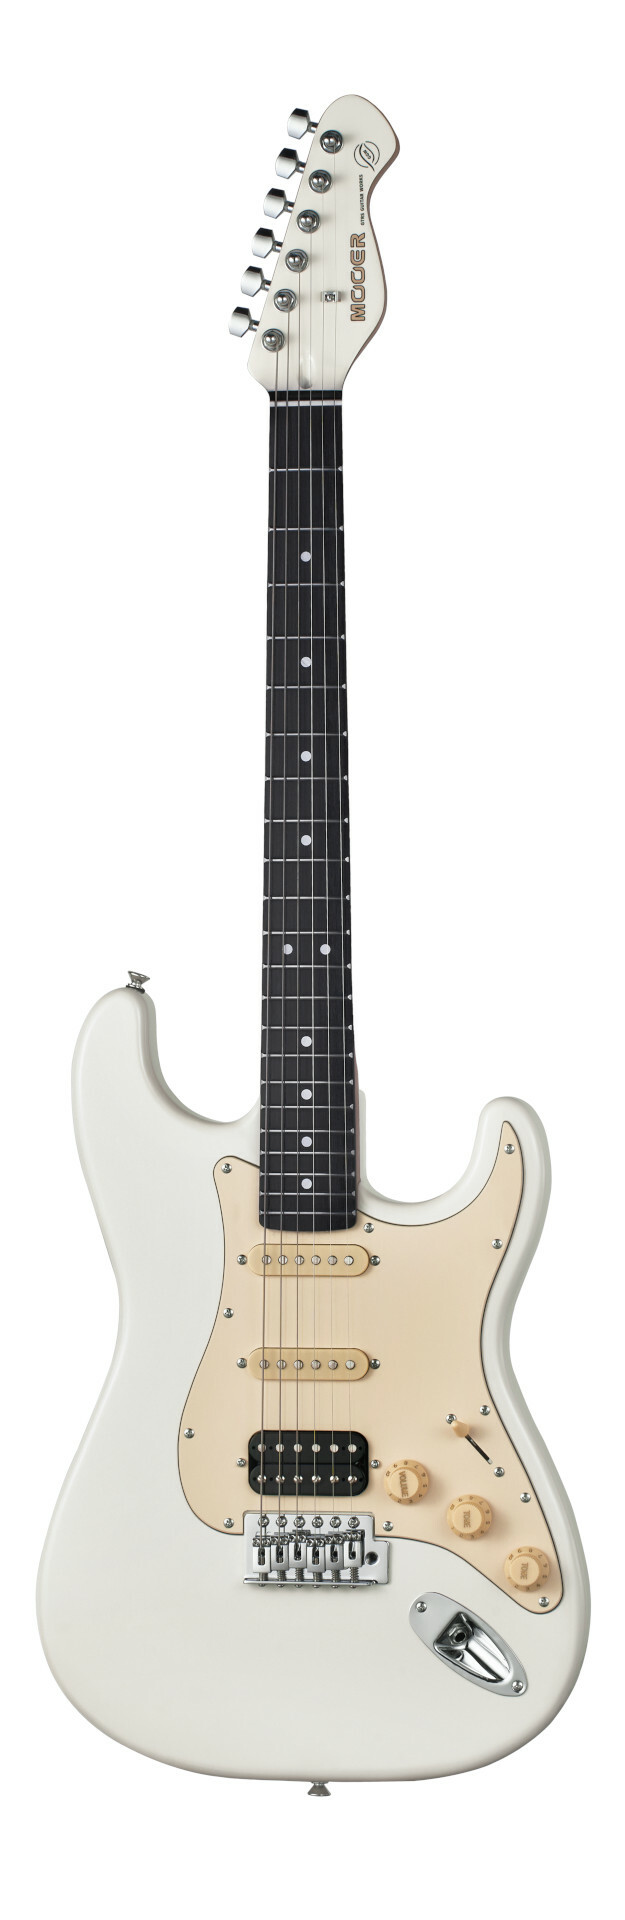 Mooer MSC10 Pro Guitar - Vintage White